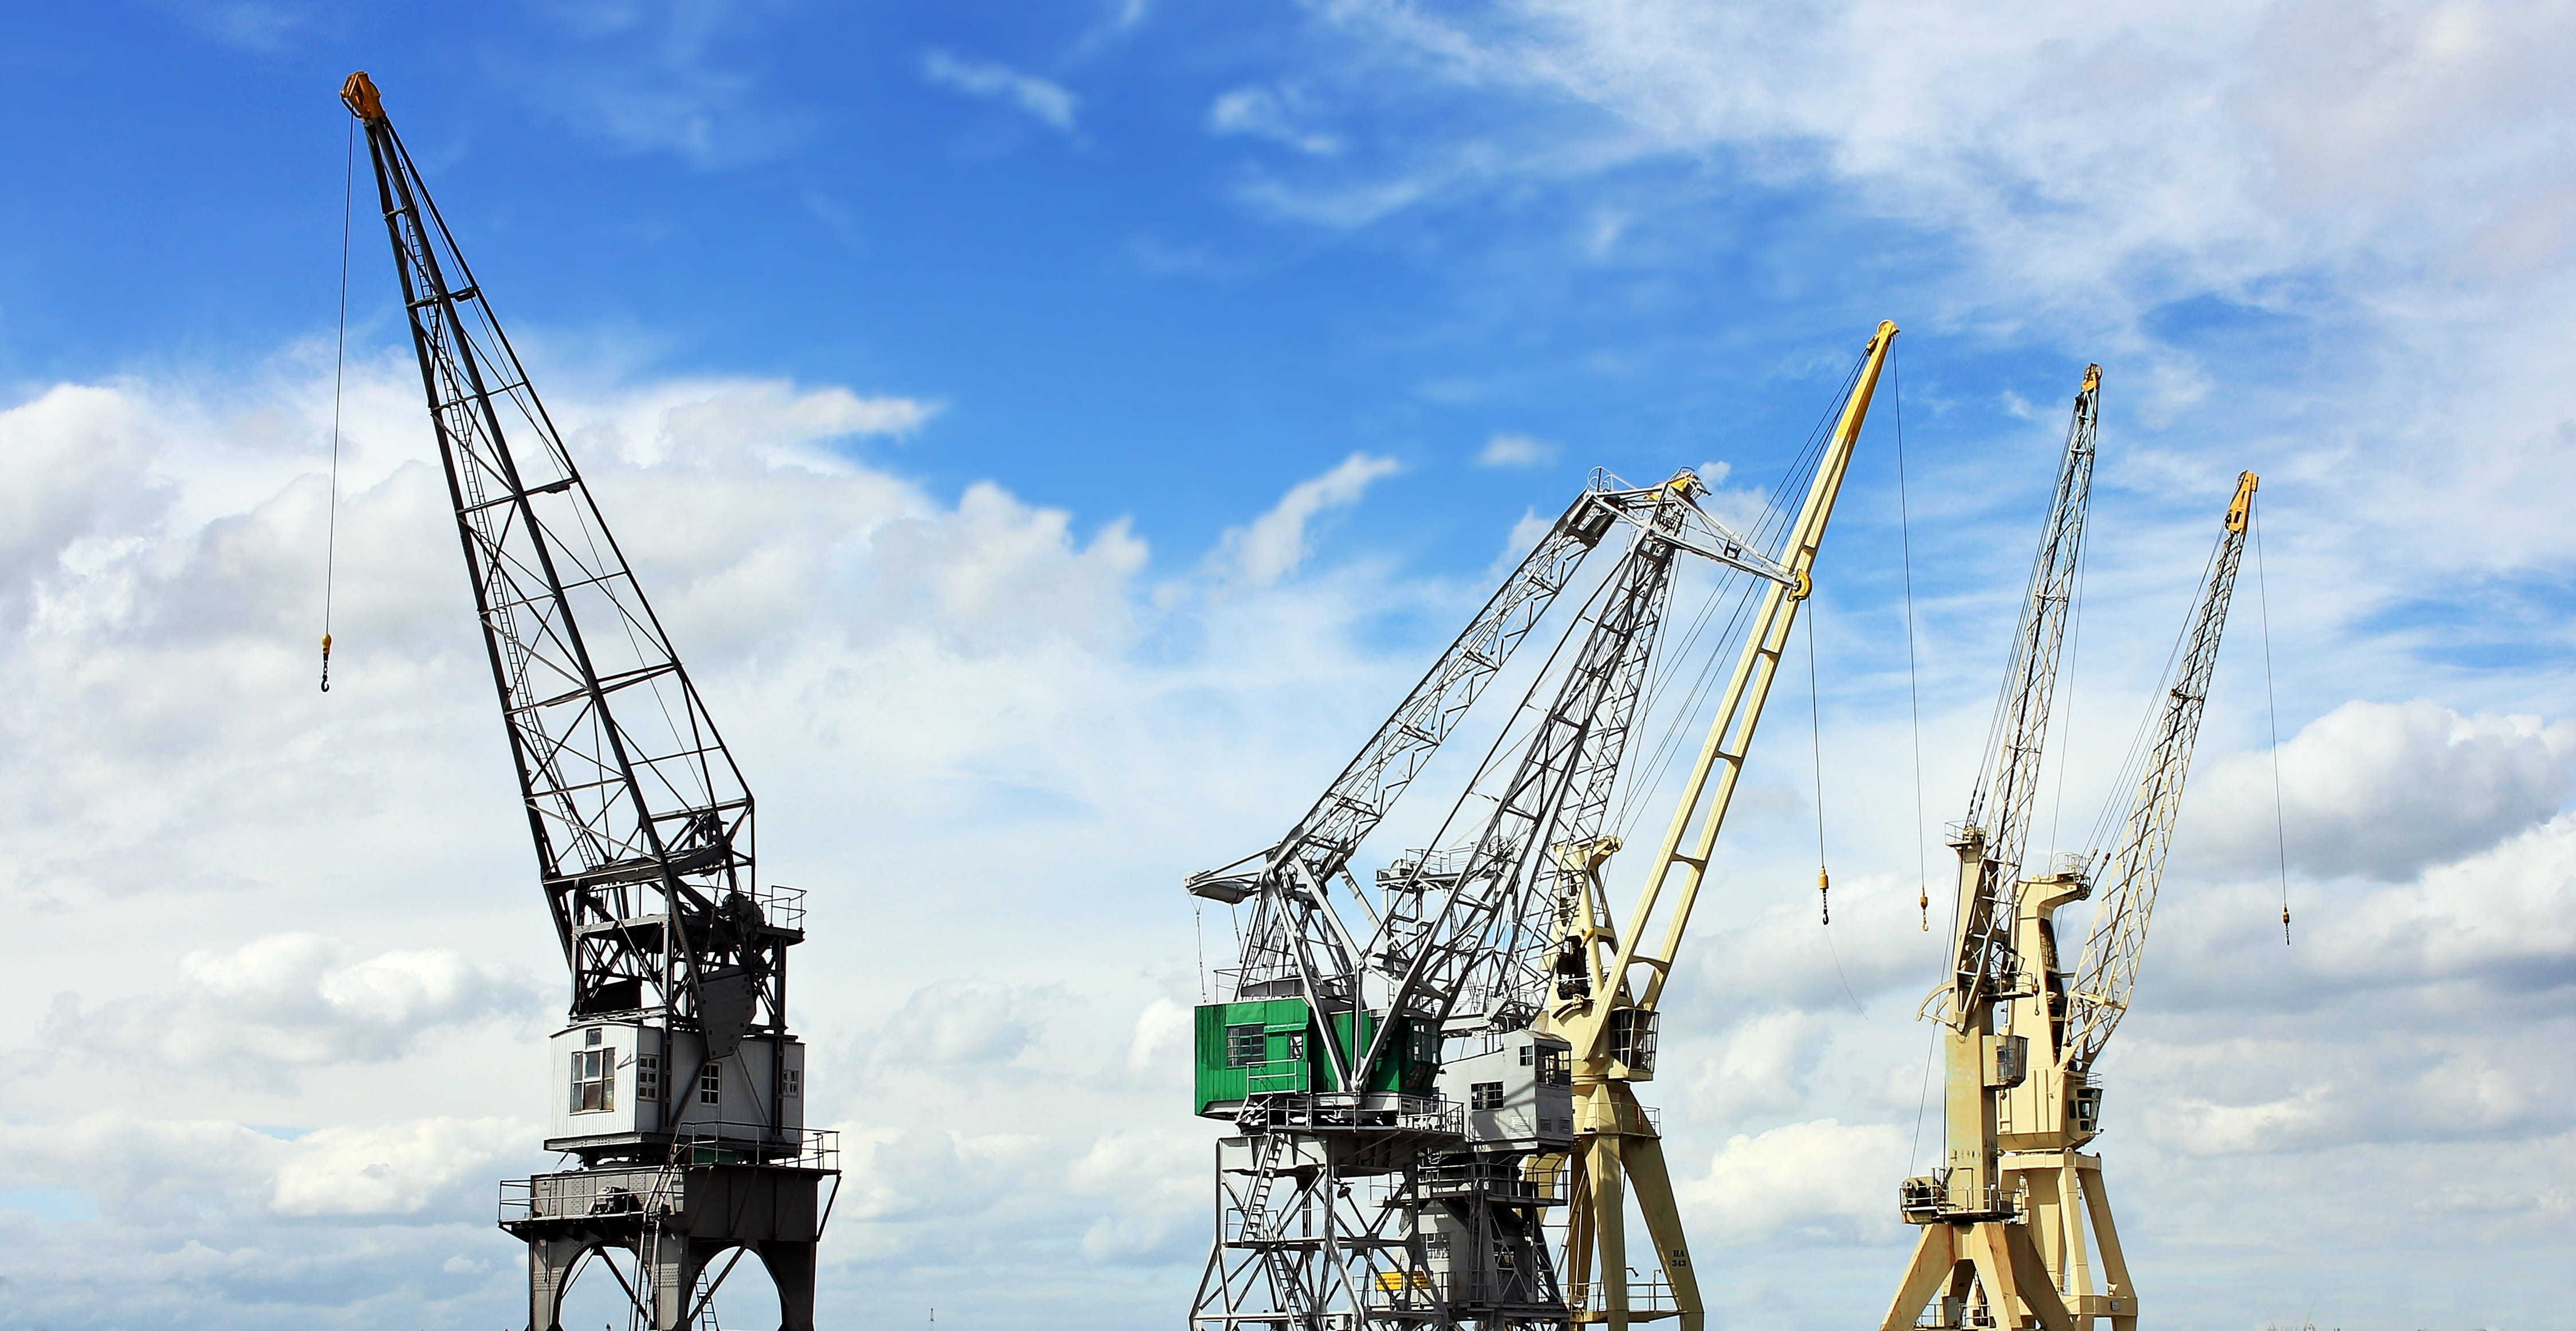 brown industrial machines under white clouds, Harbour, Cranes